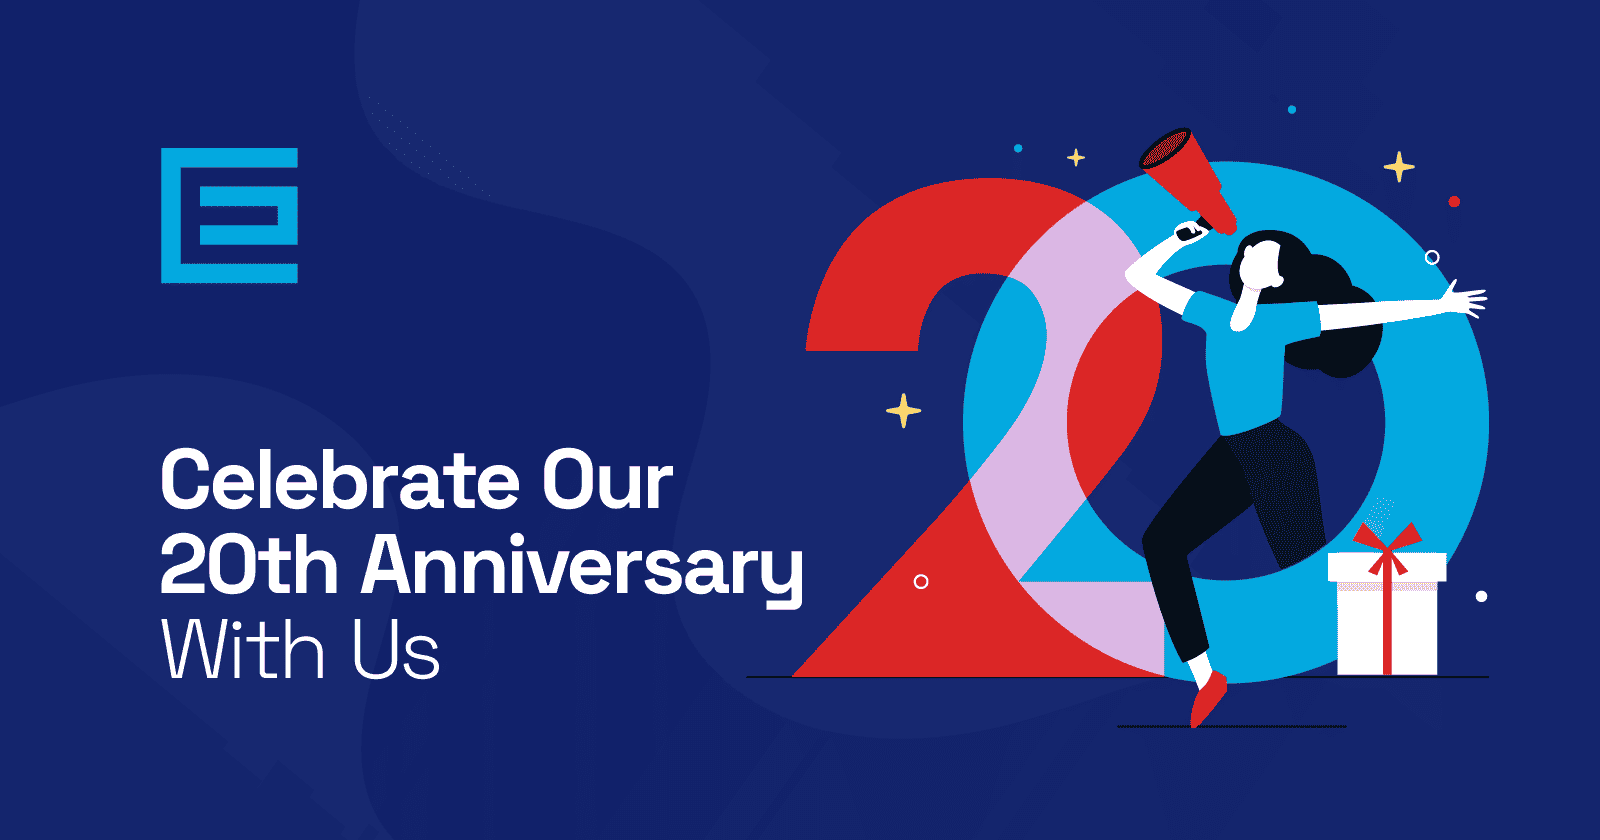 Join Us in Celebrating TheeDigital’s 20th Anniversary!